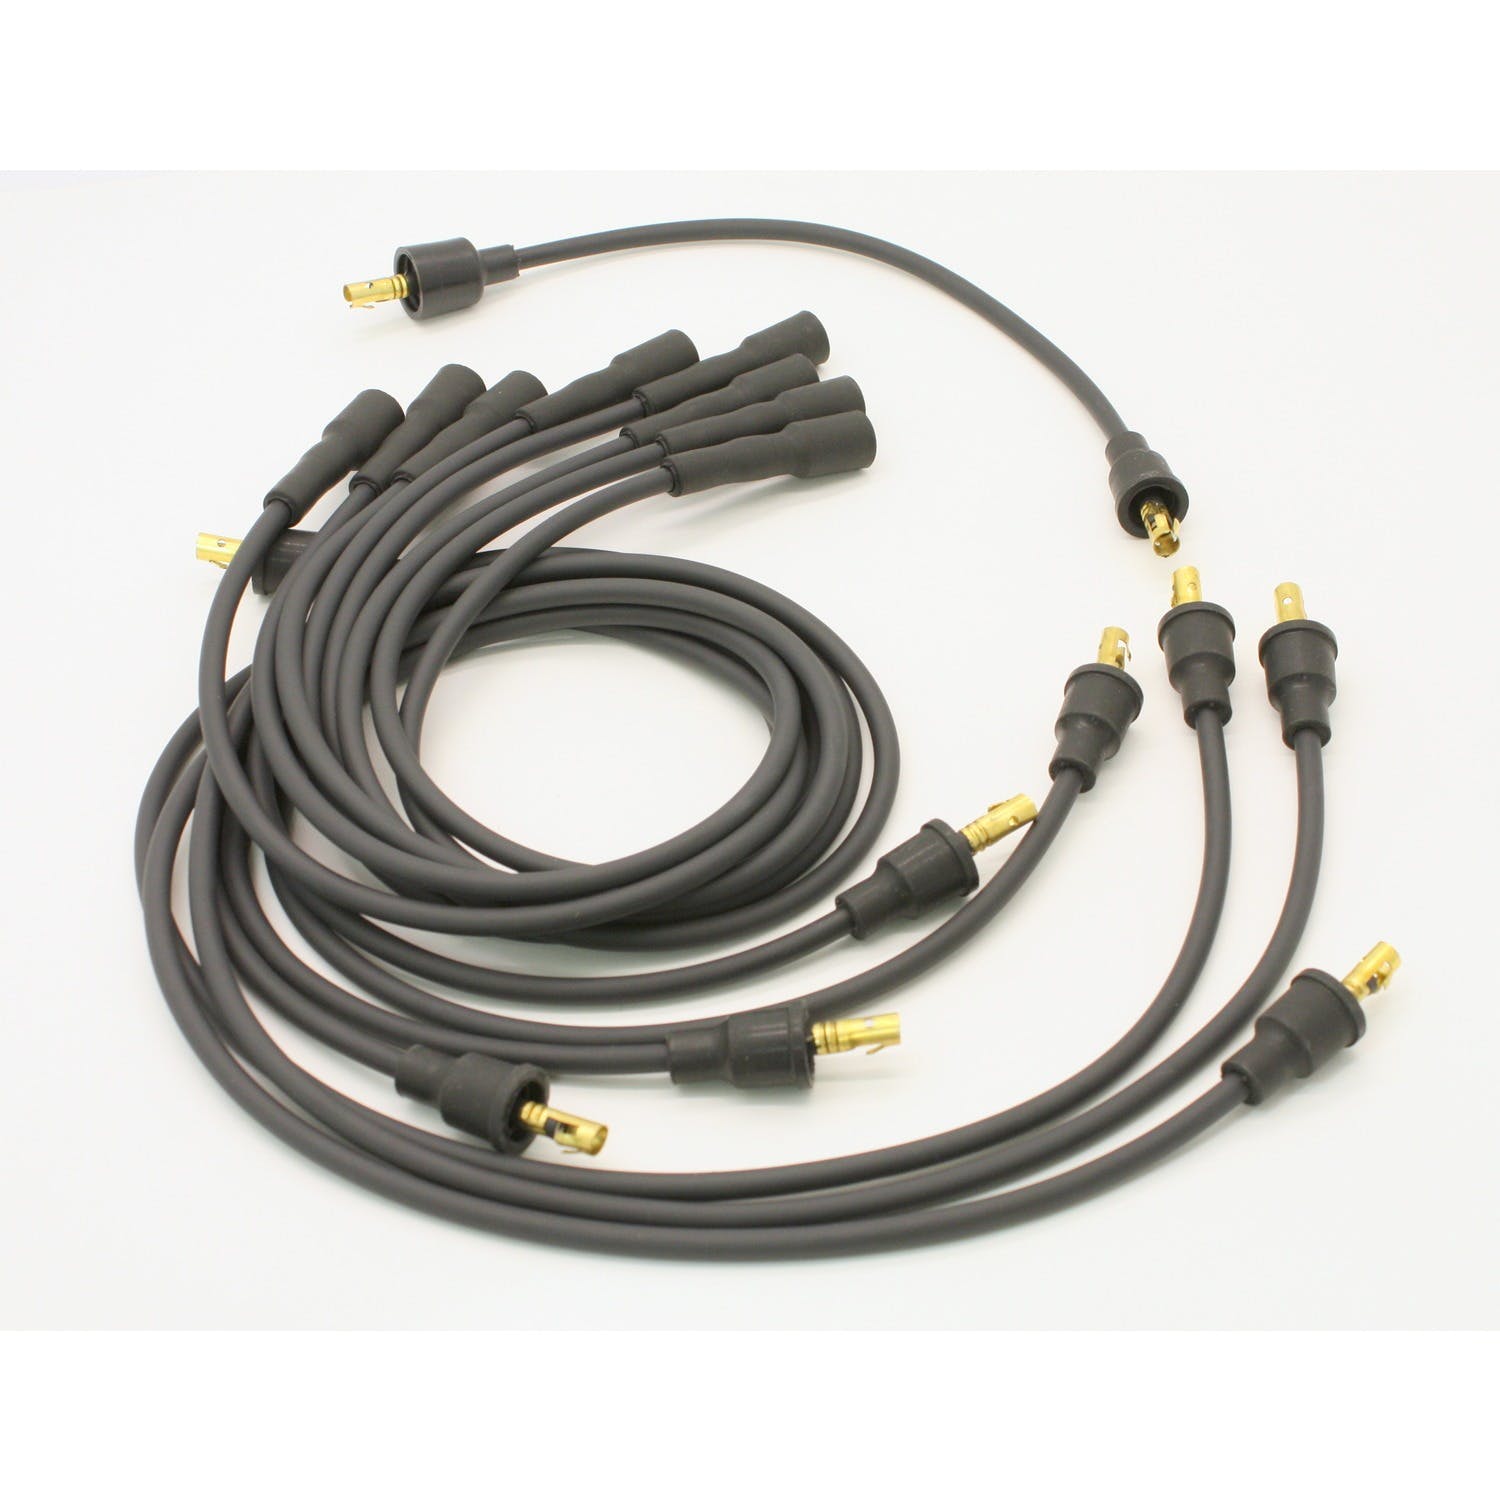 PerTronix 708102 Spark Plug Wire Set